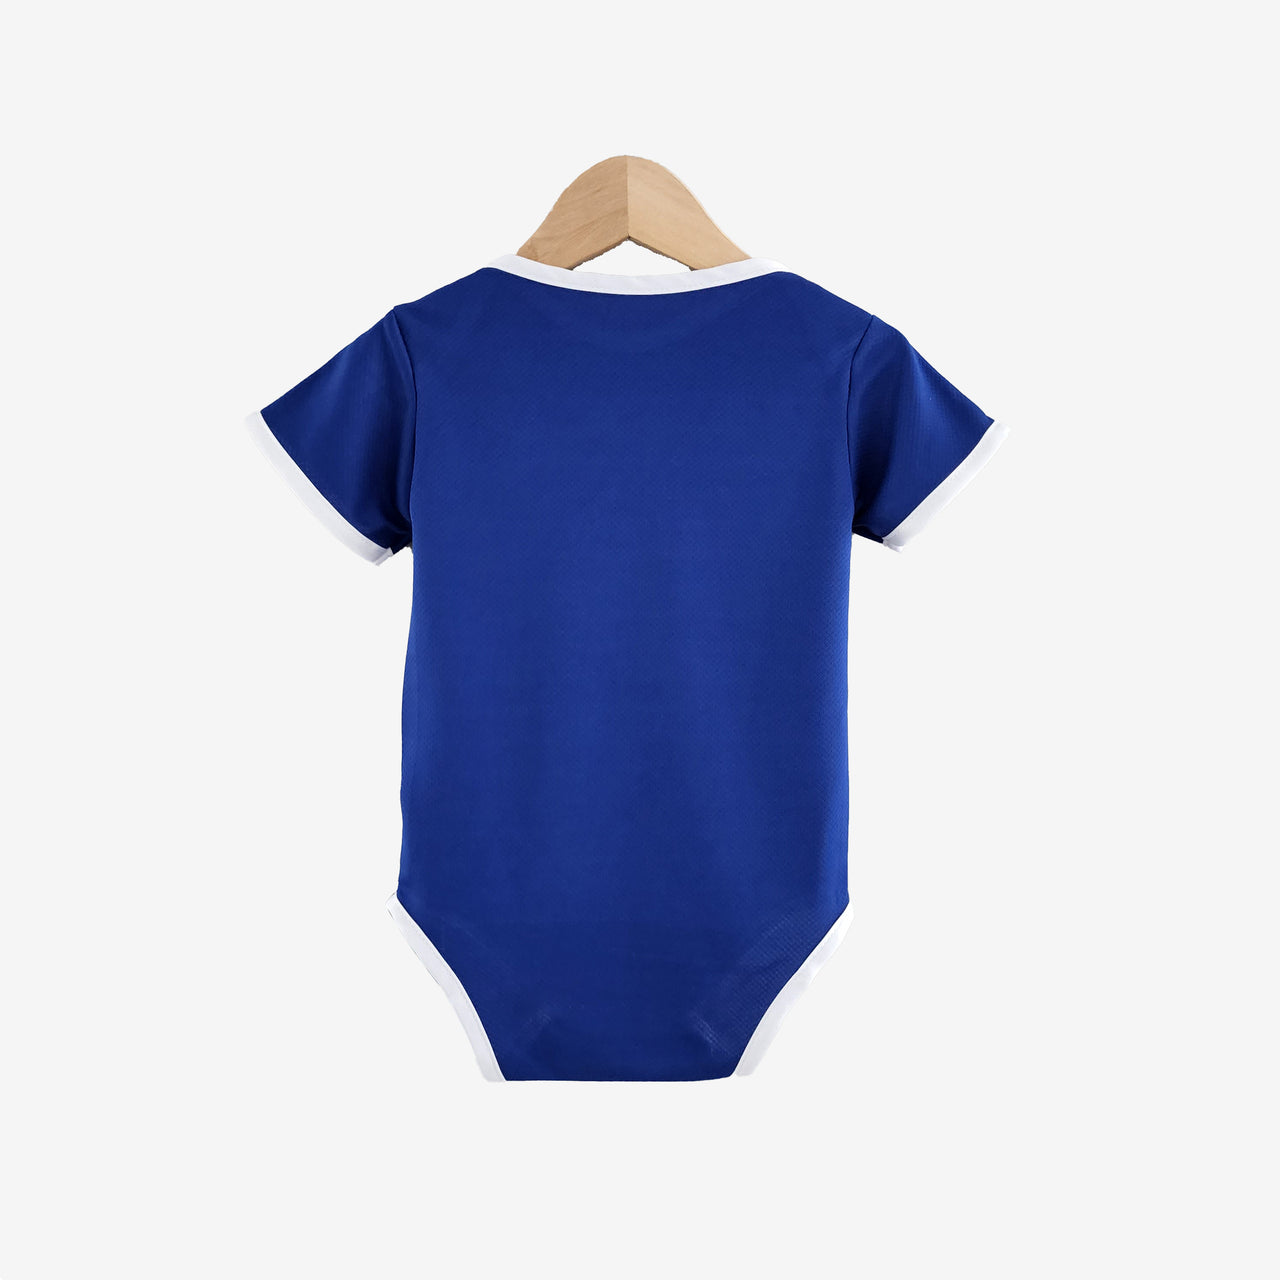 Chelsea F.C Infant Bodysuit 22/23